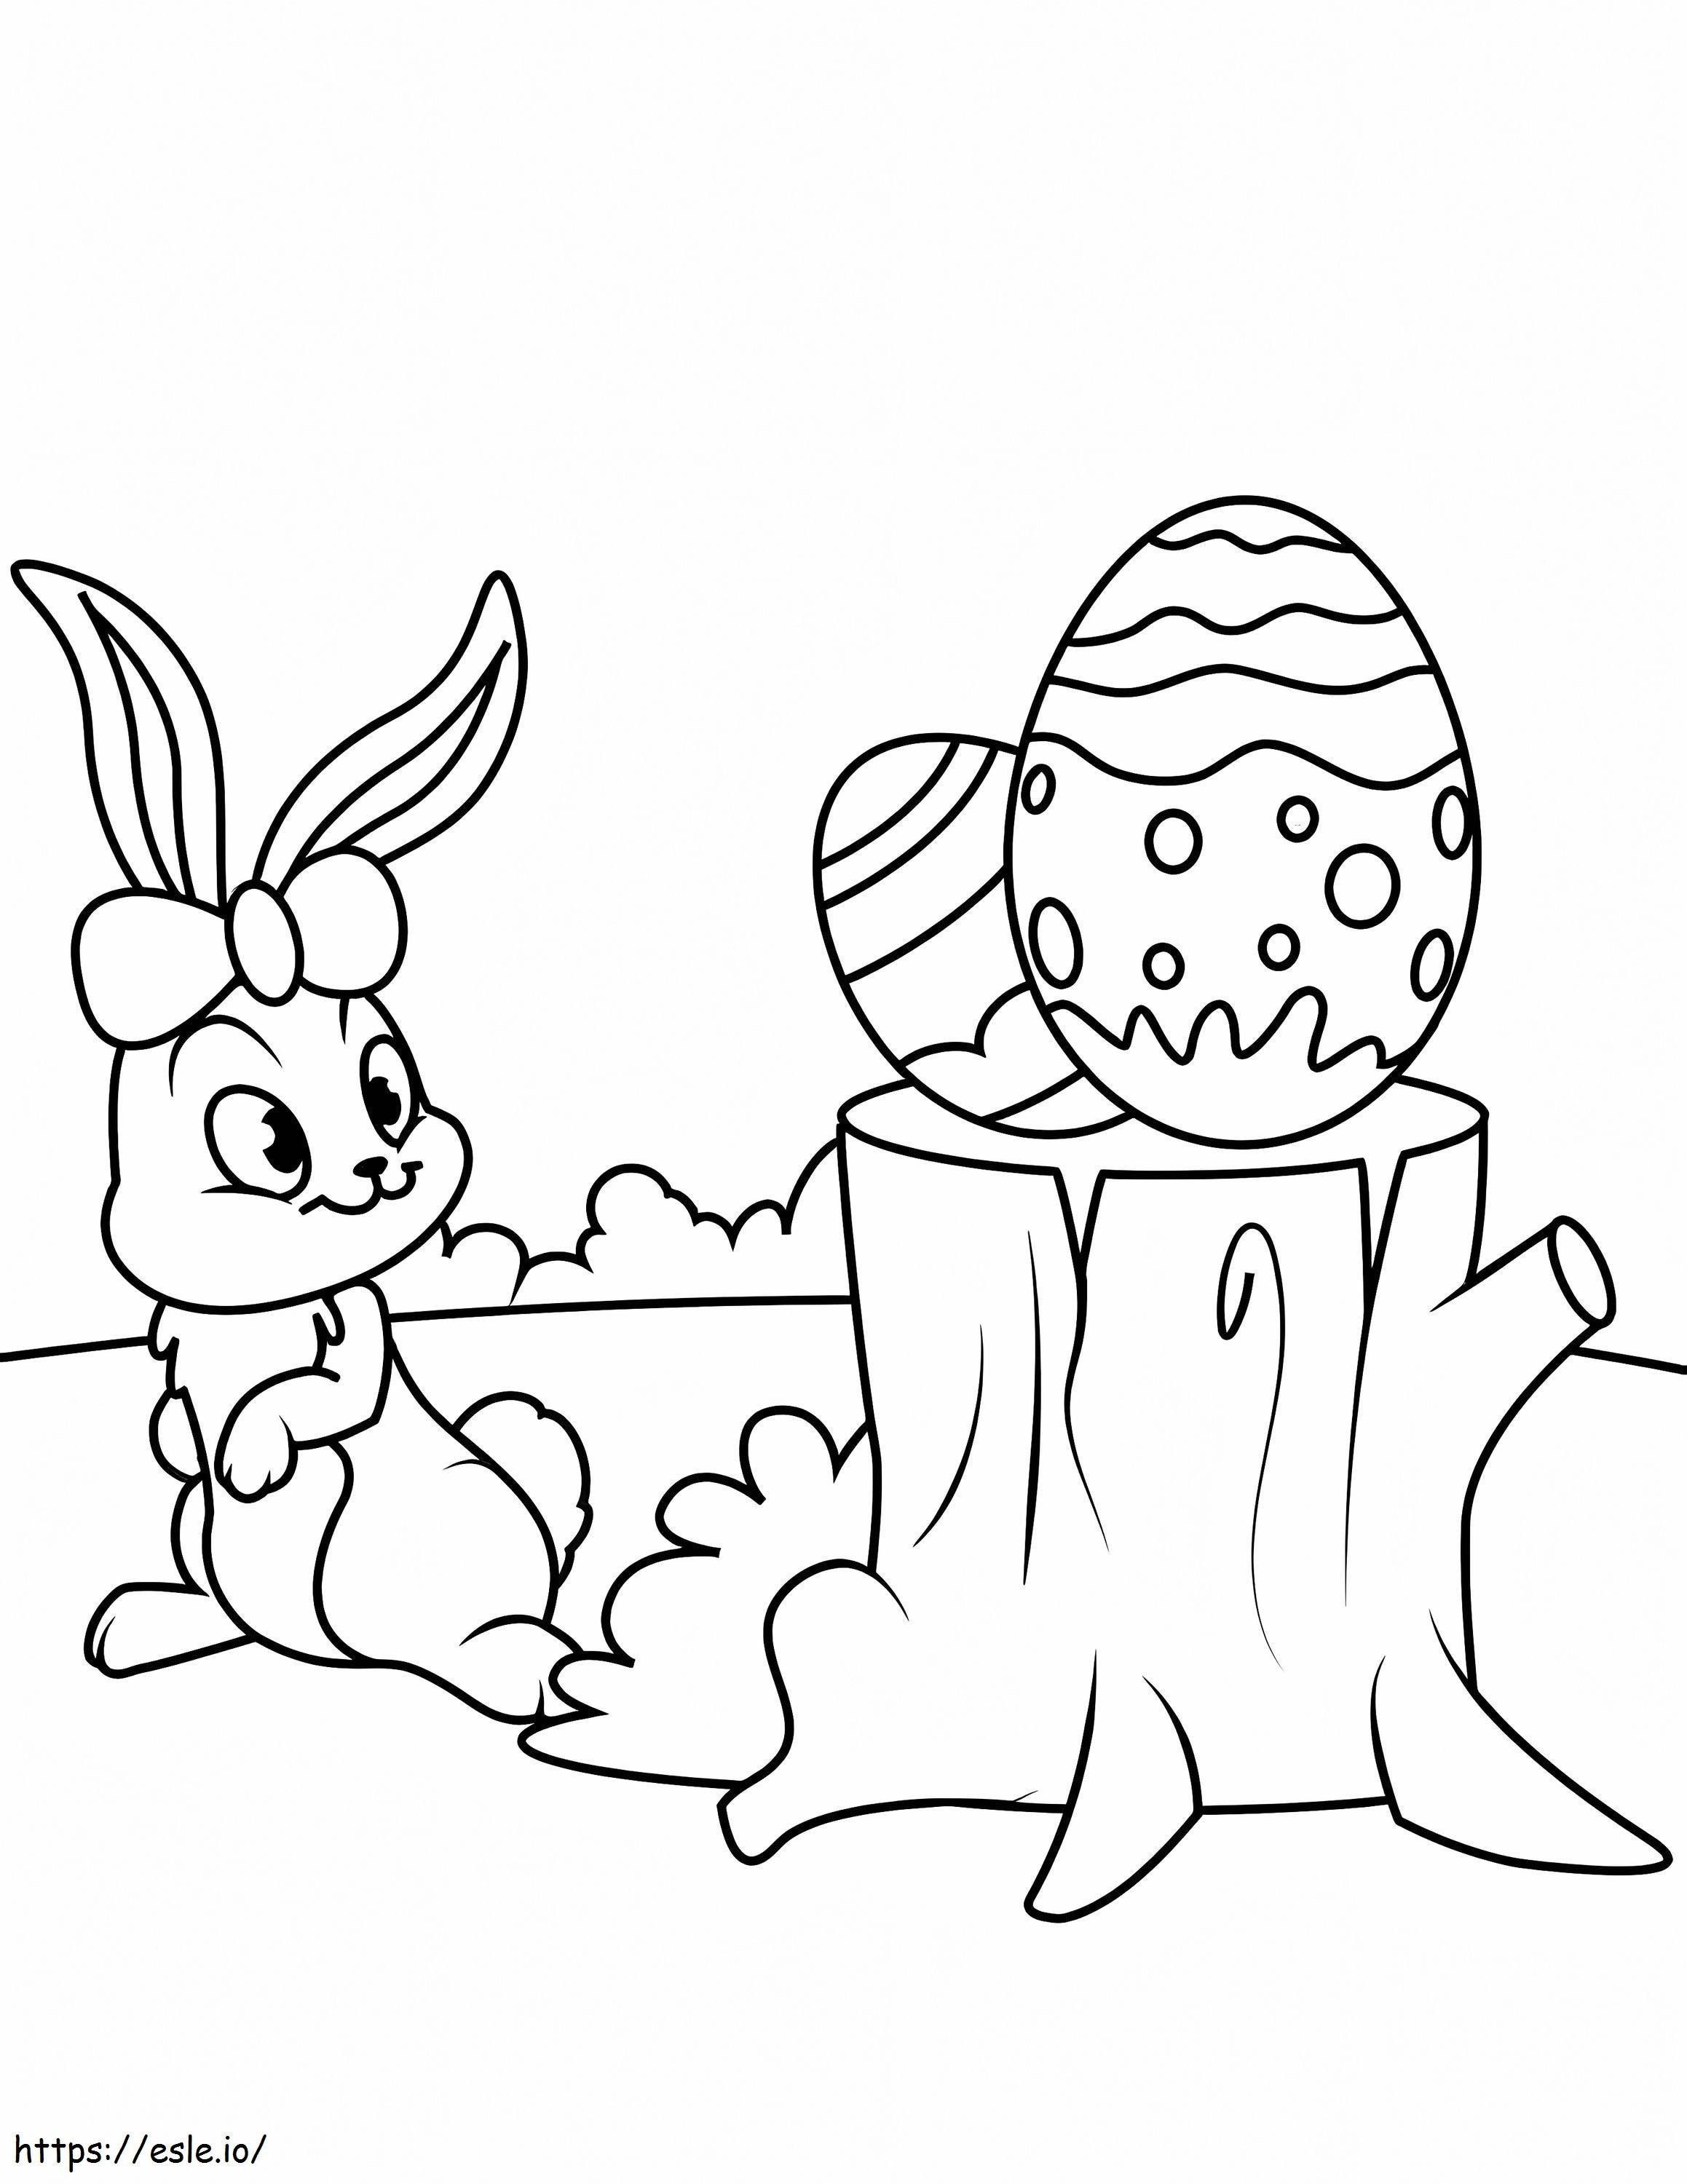 Conejo de Pascua con huevos para colorear